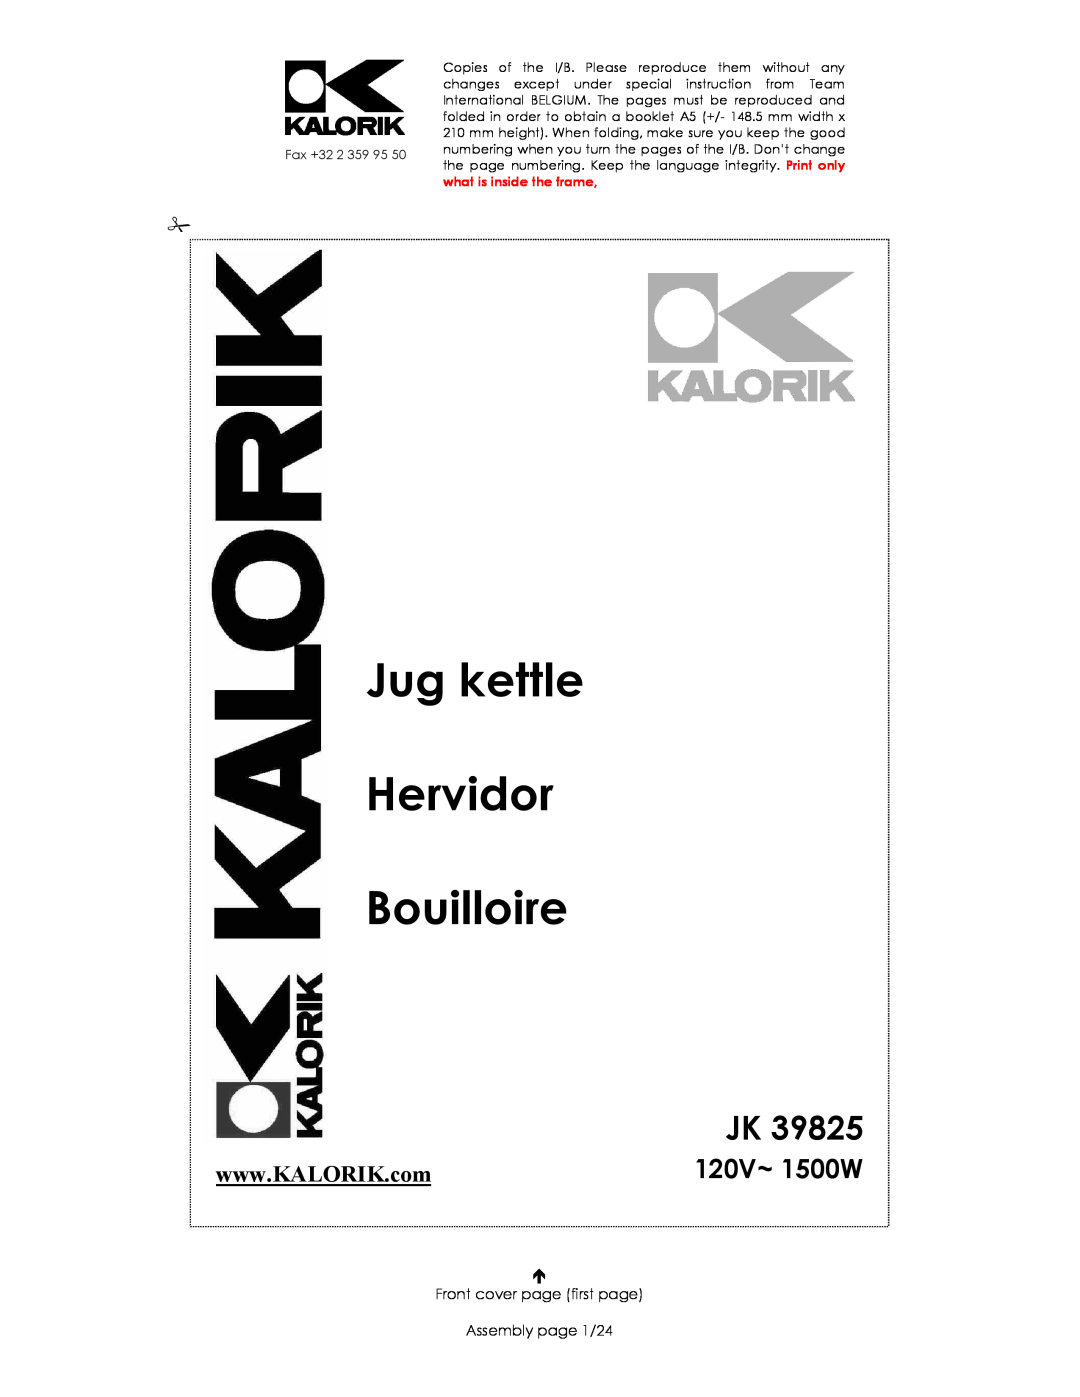 Kalorik JK 39825 manual Jug kettle Hervidor Bouilloire, 120V~ 1500W, Front cover page first page Assembly page 1/24 